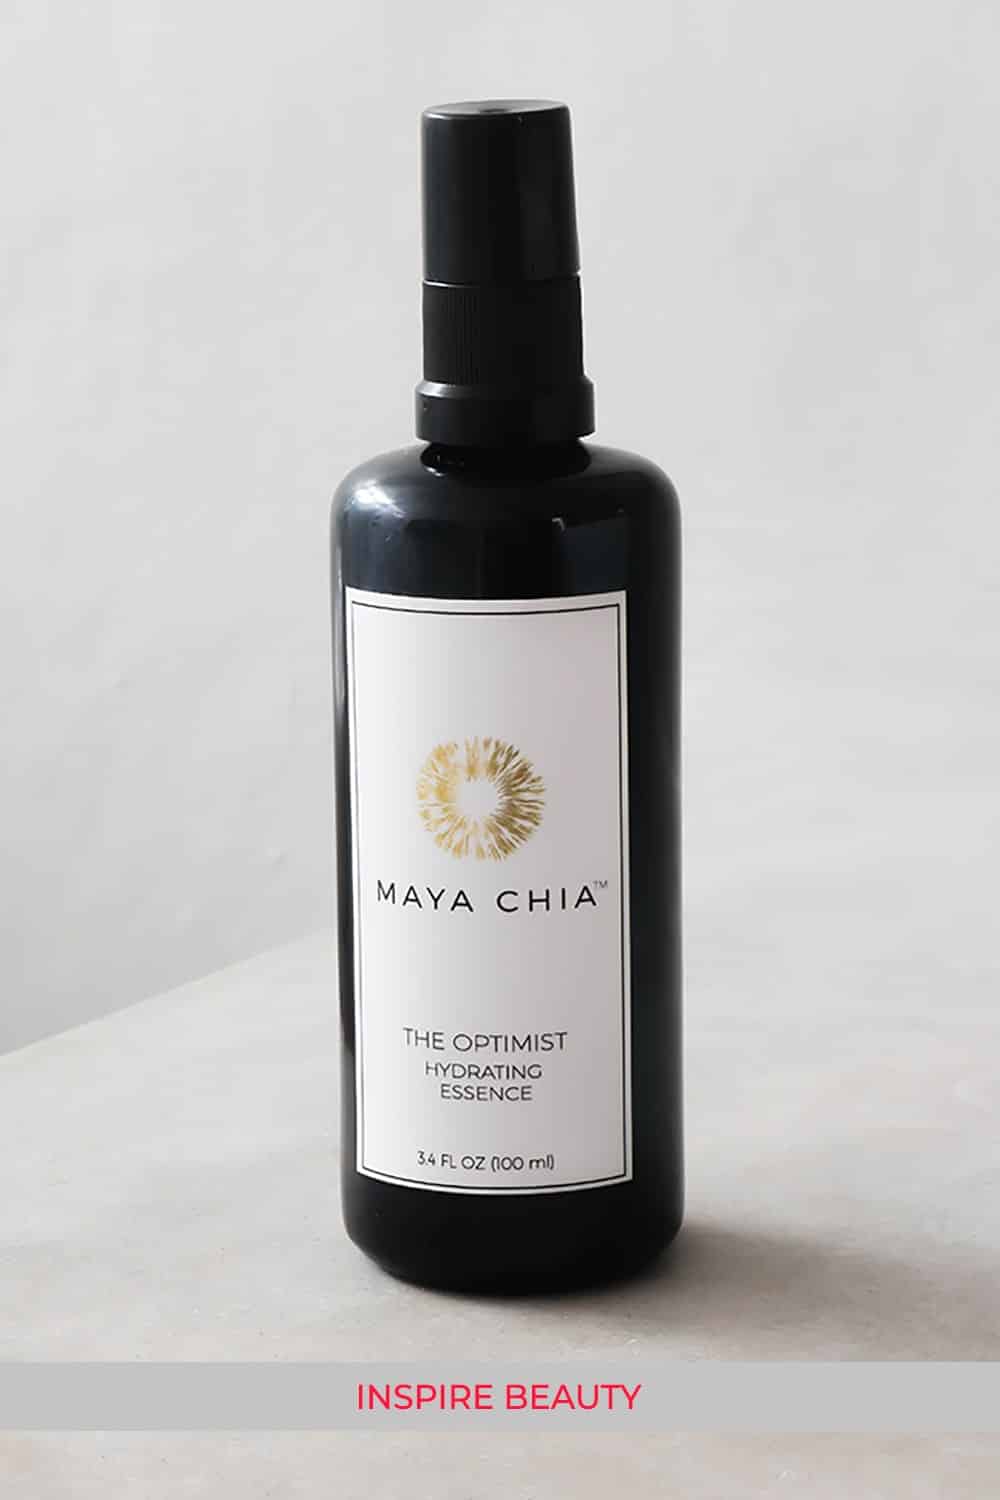 Maya Chia The Optimist Hydrating Essence review